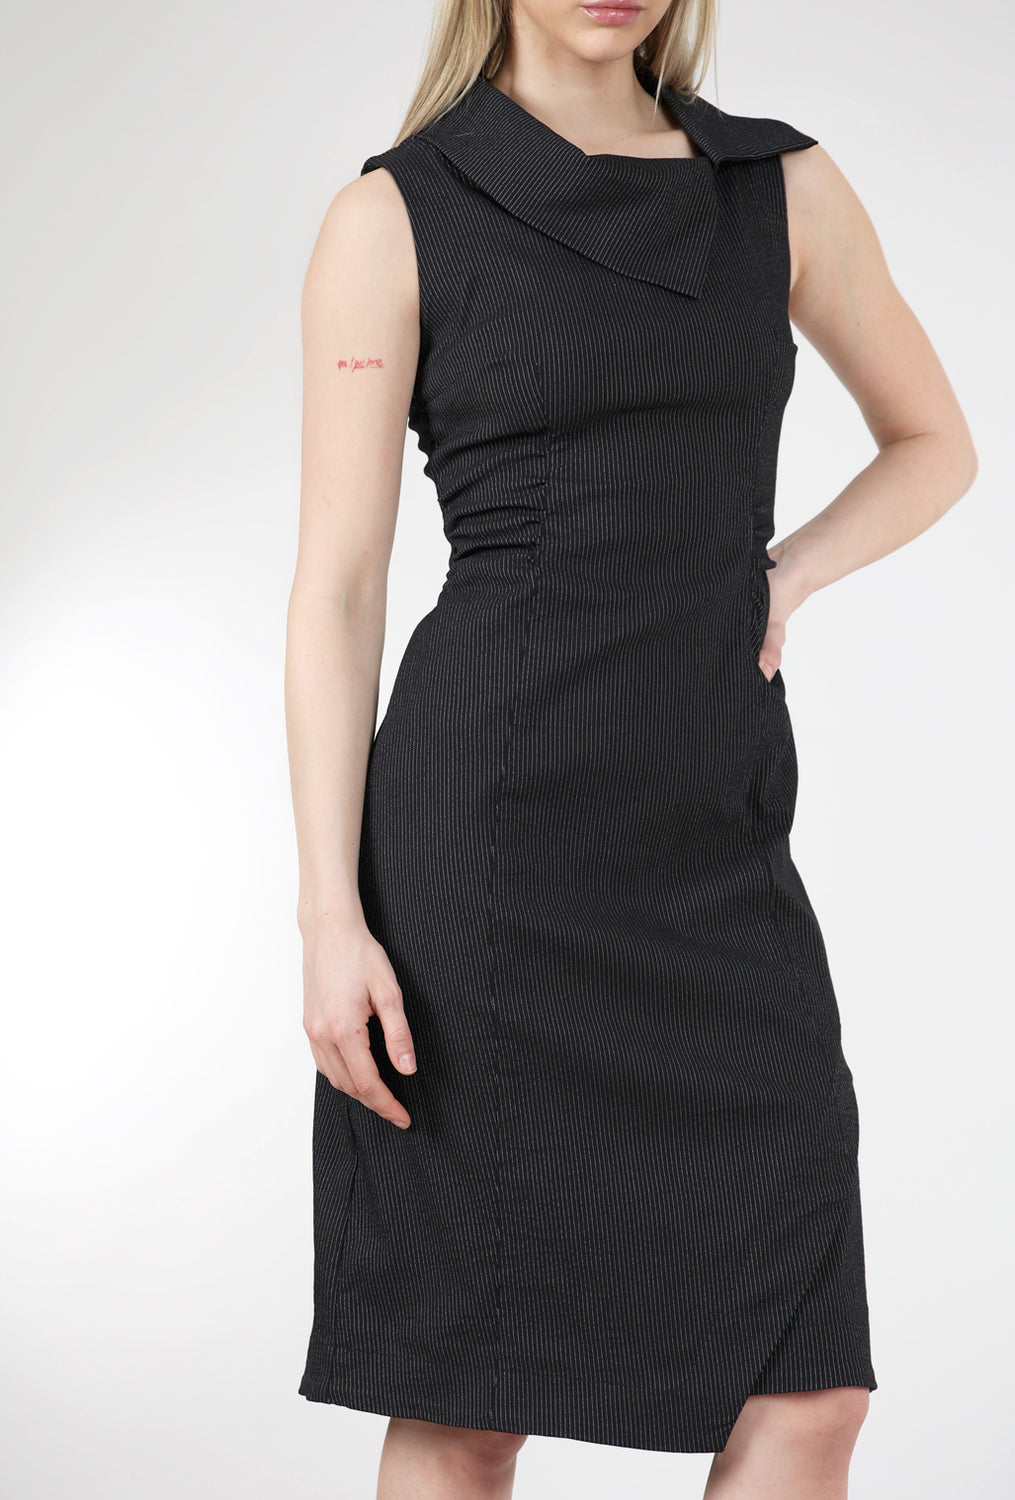 Porto Arden Dress, Black Stripe 